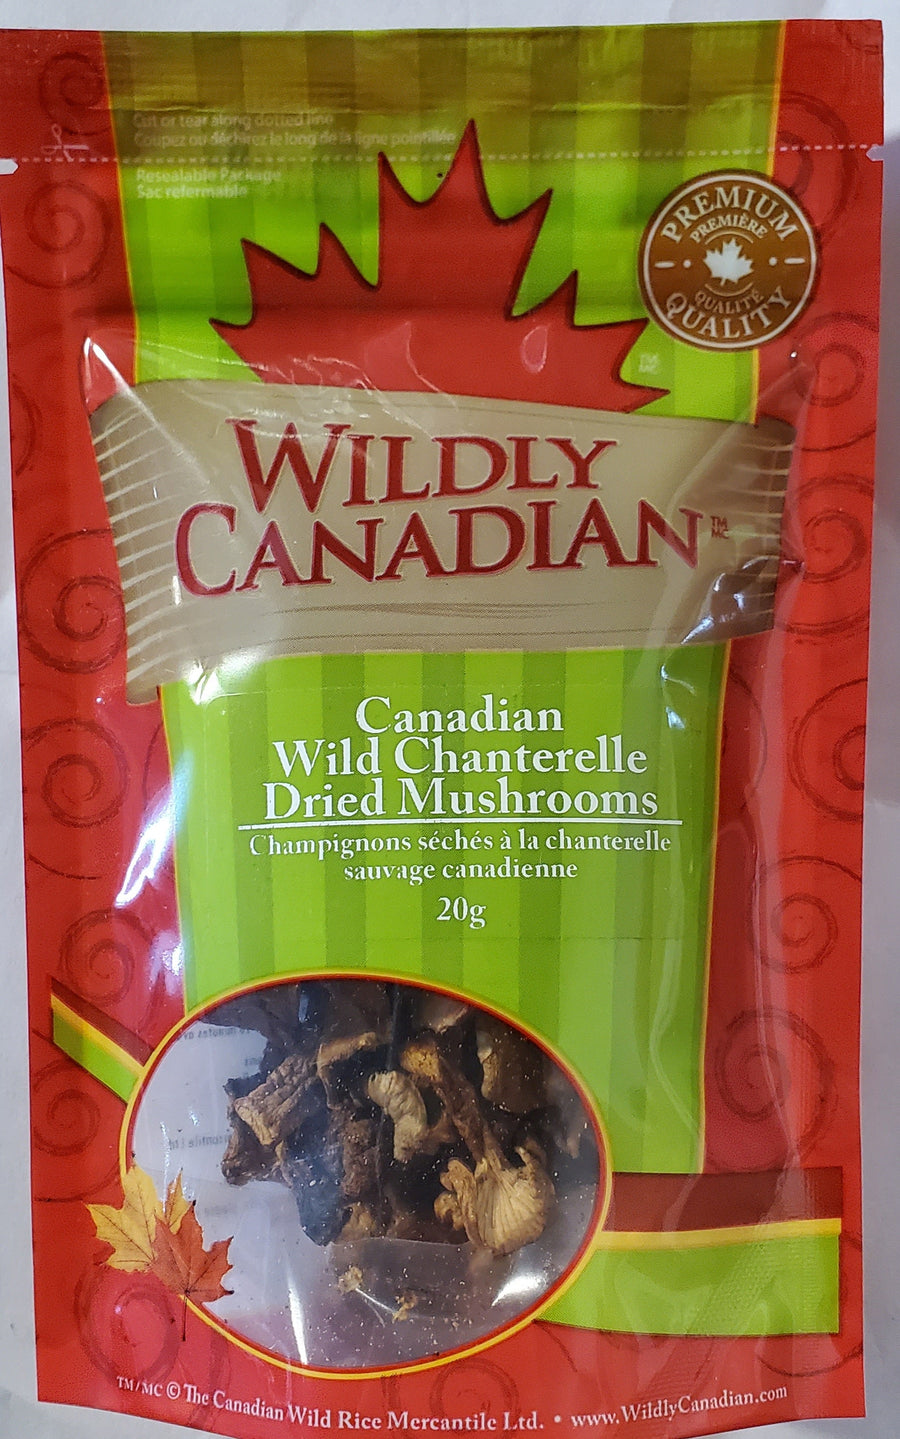 Canadian Wild Chanterelle Dried Mushrooms